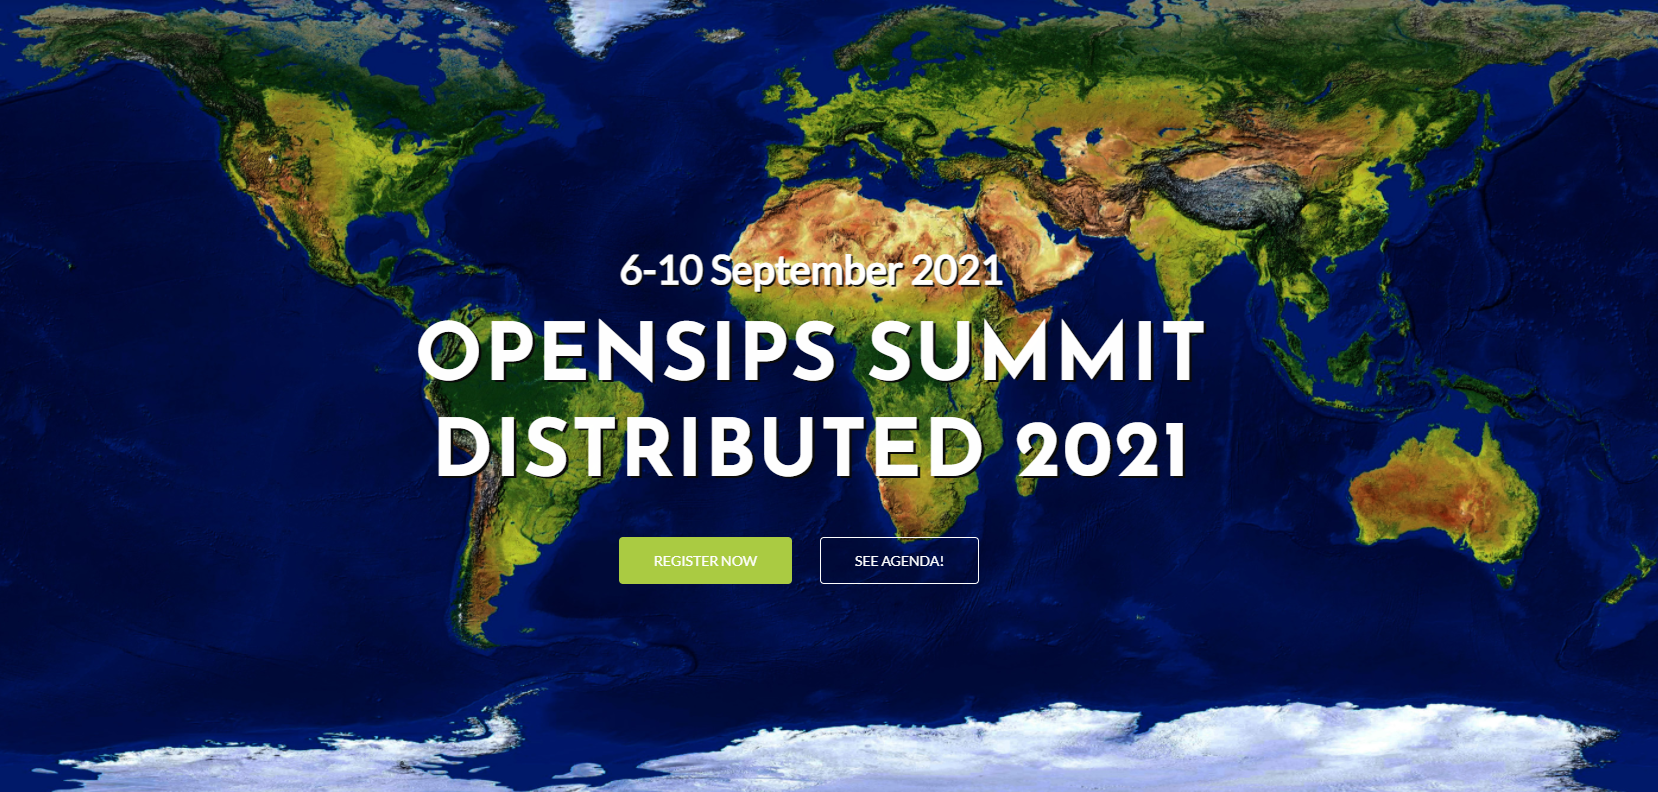 OpenSIPS 2021: An Impressive Crowd of Solutioneers